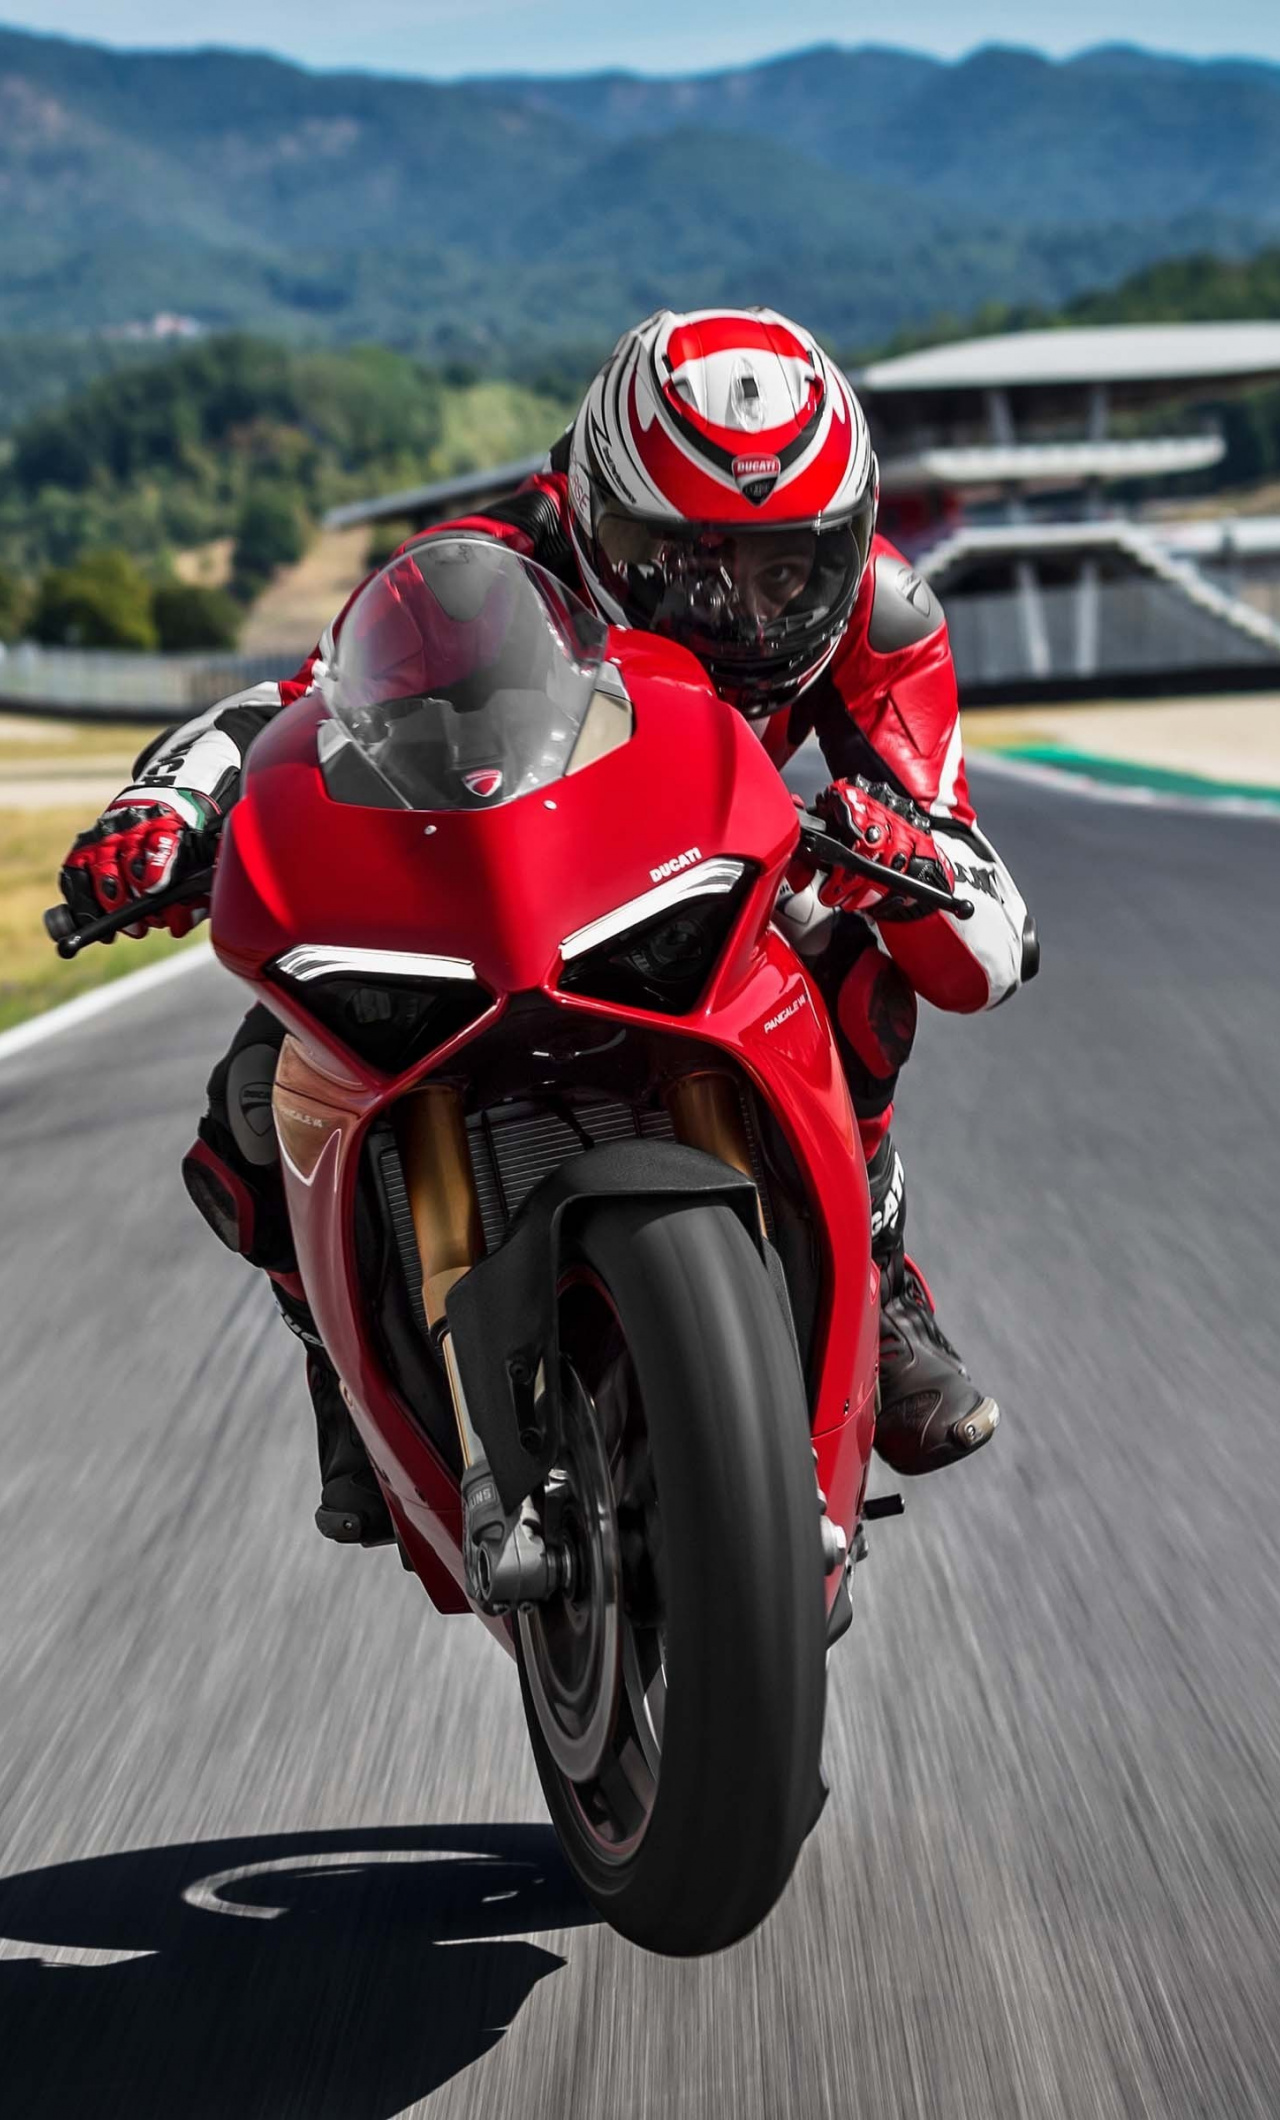 Ducati V4 2115779 Hd Wallpaper Backgrounds Download